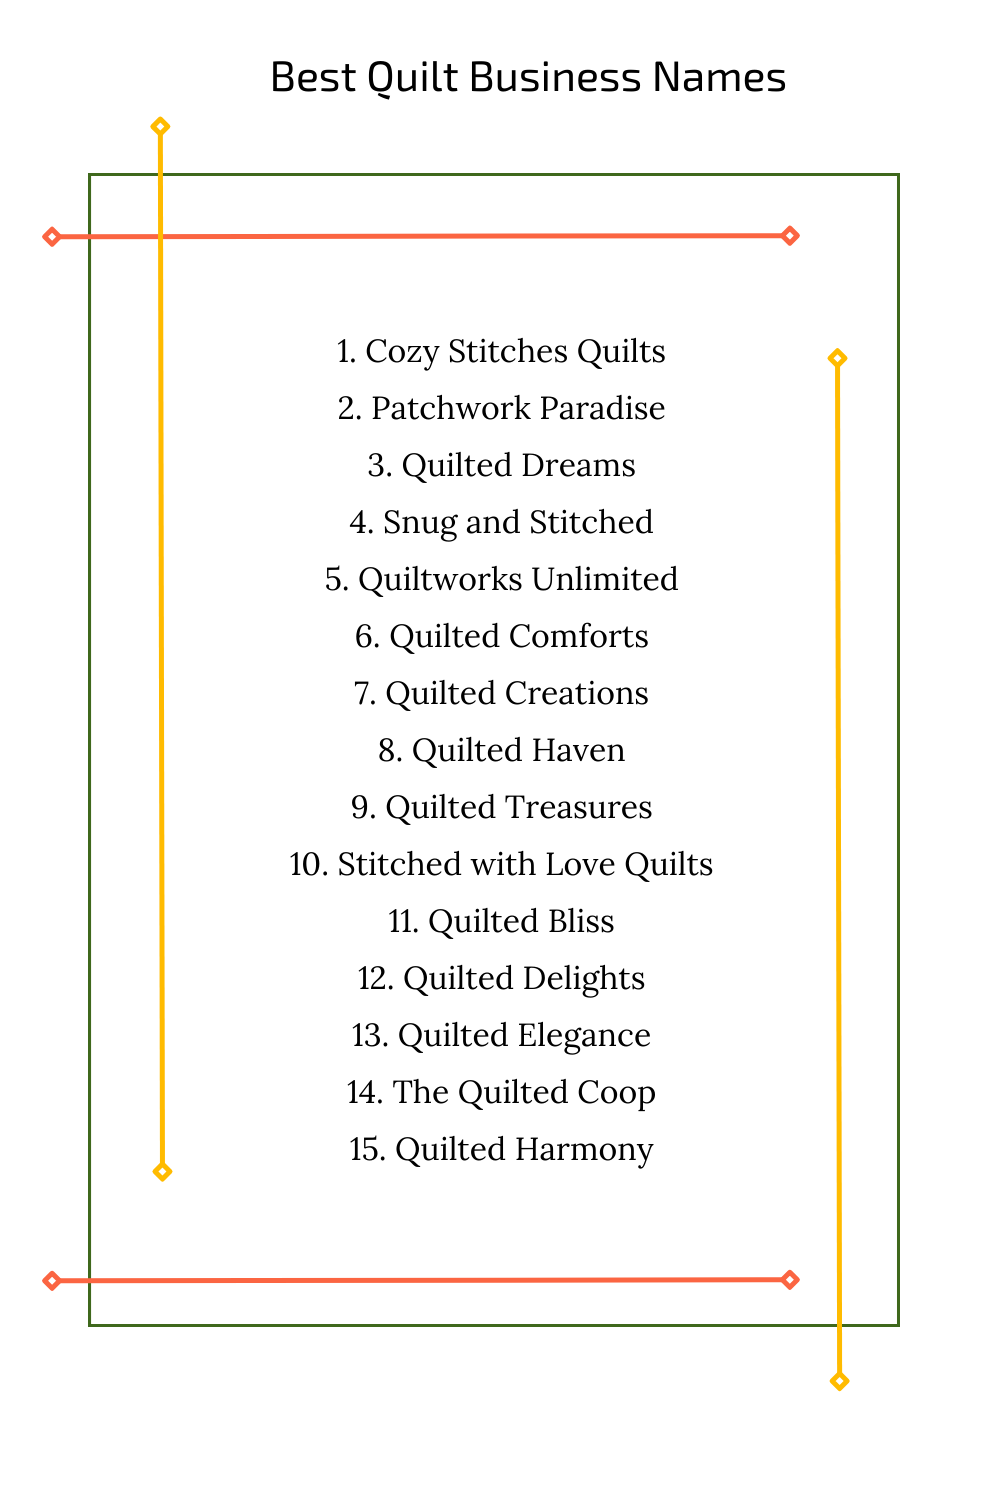 Best Quilt Business Names